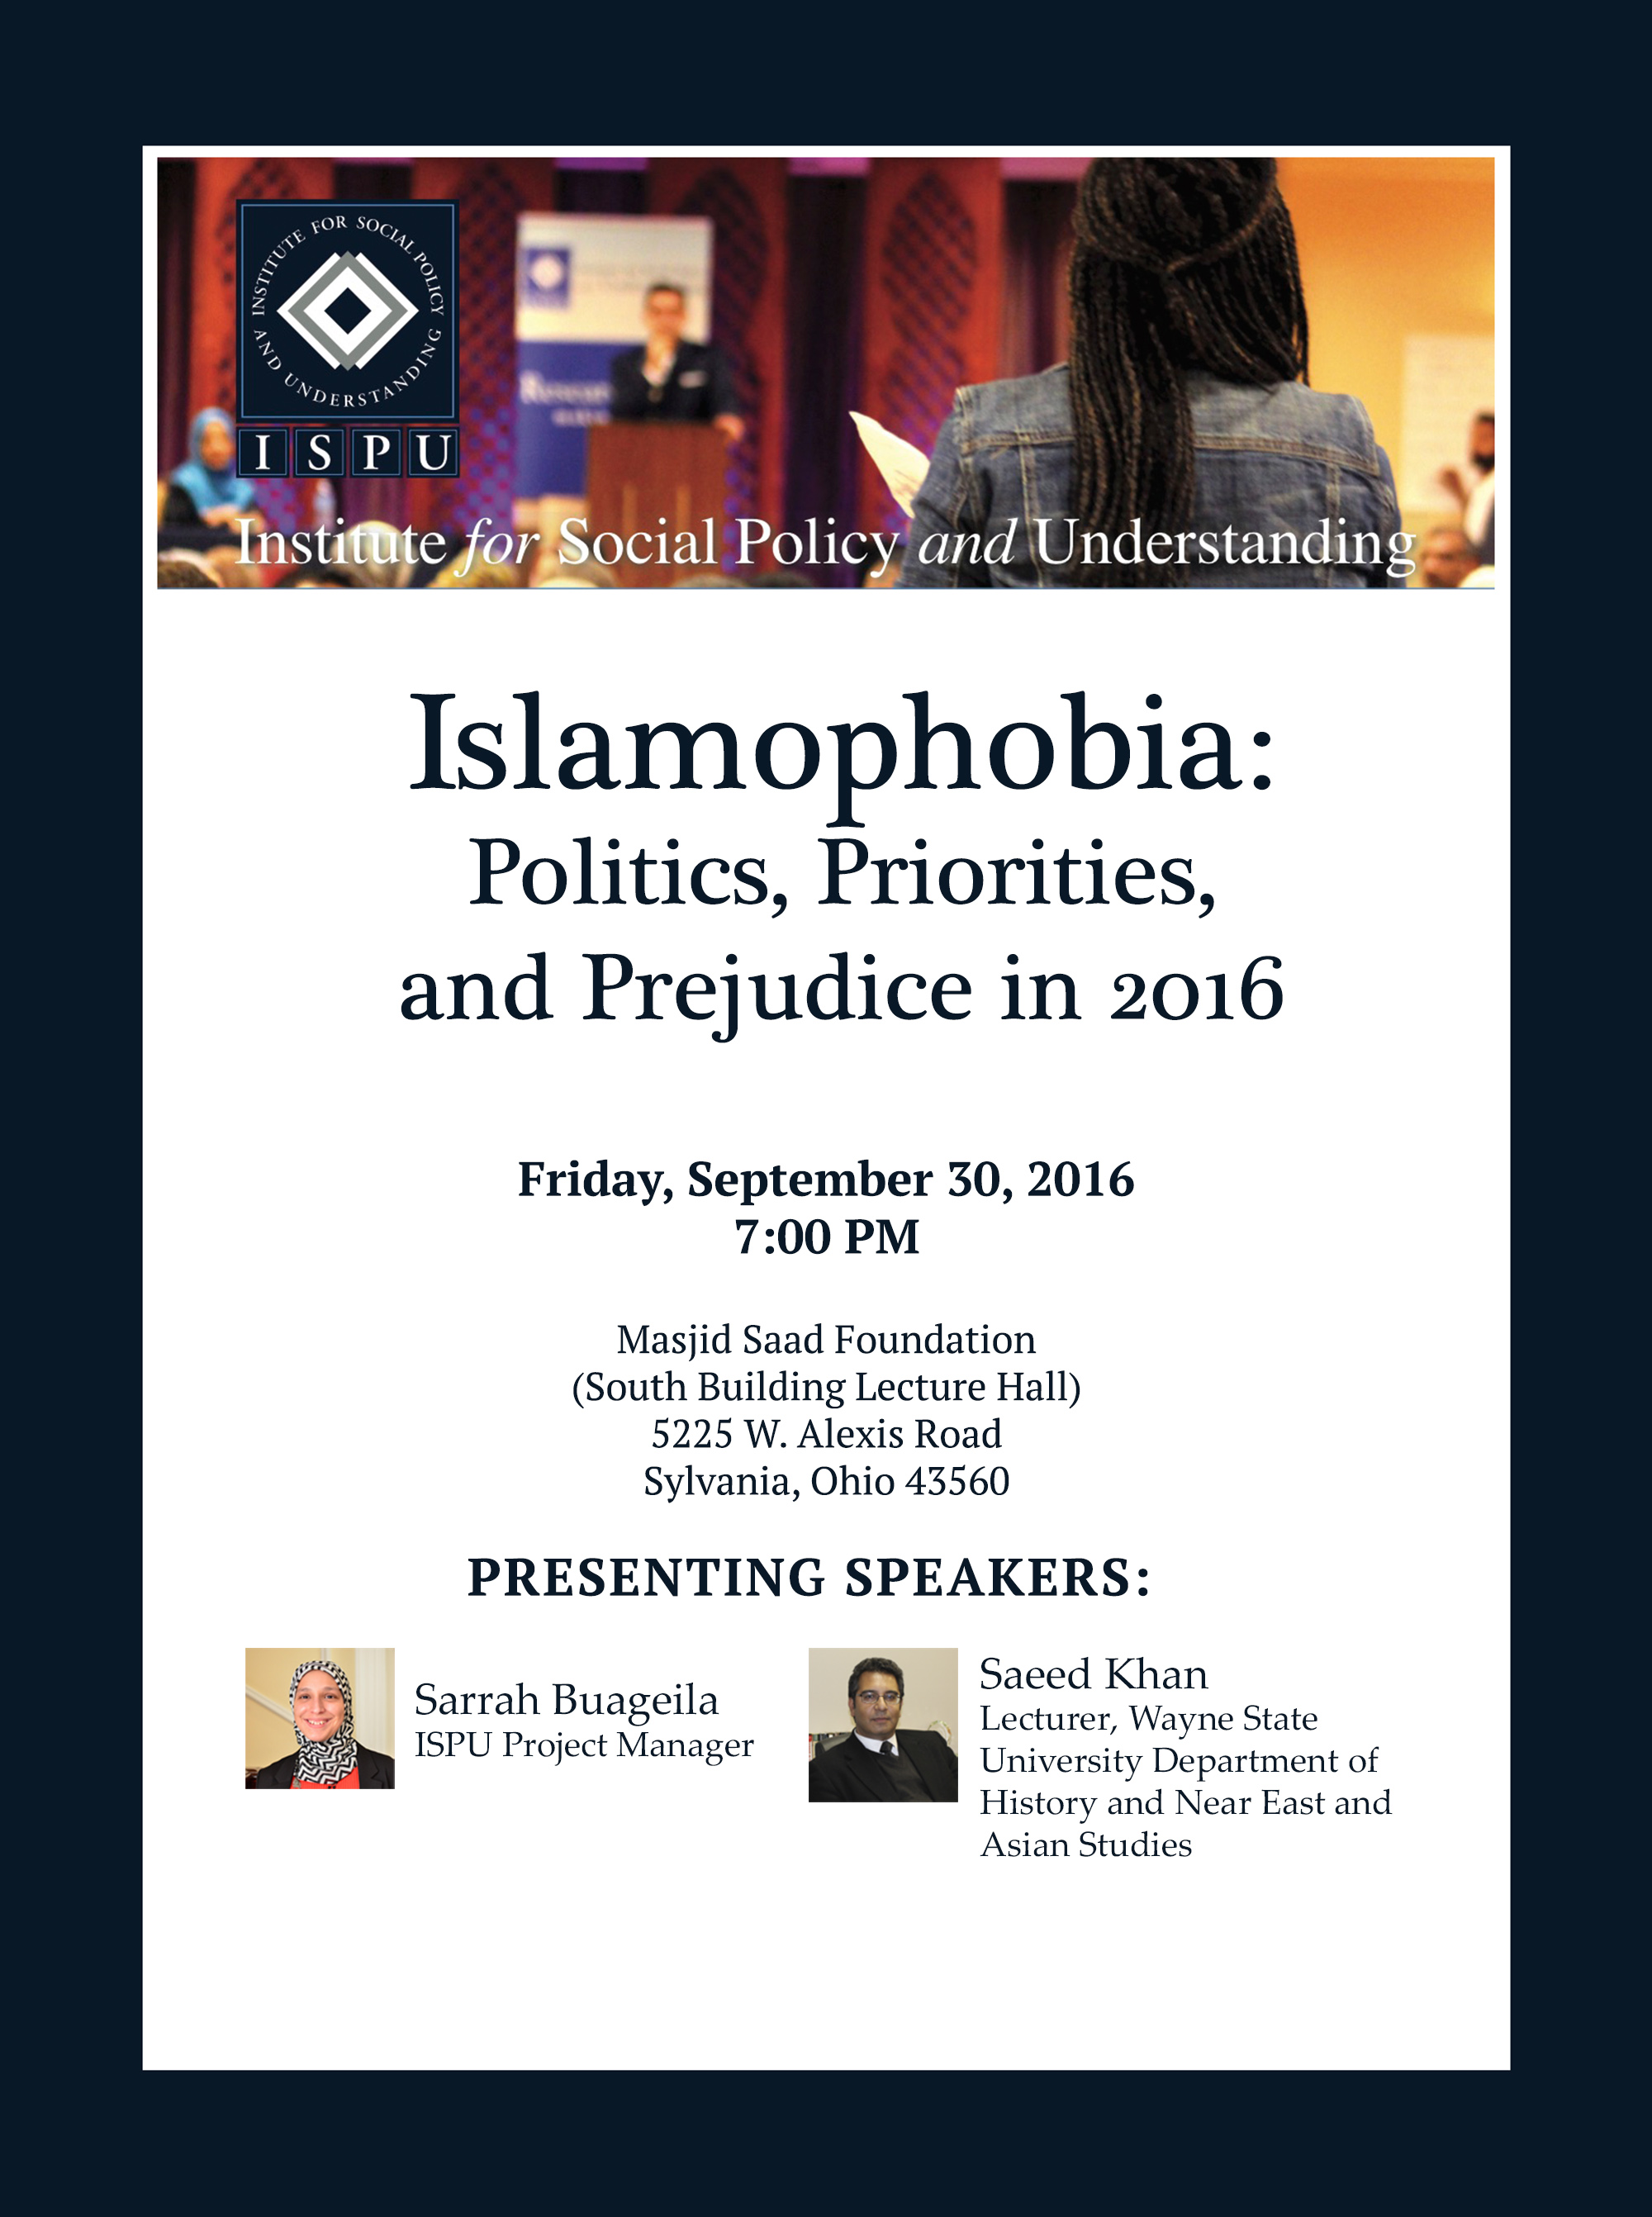 Islamophobia: Politics, Priorities, and Prejudice in 2016 -- Toledo